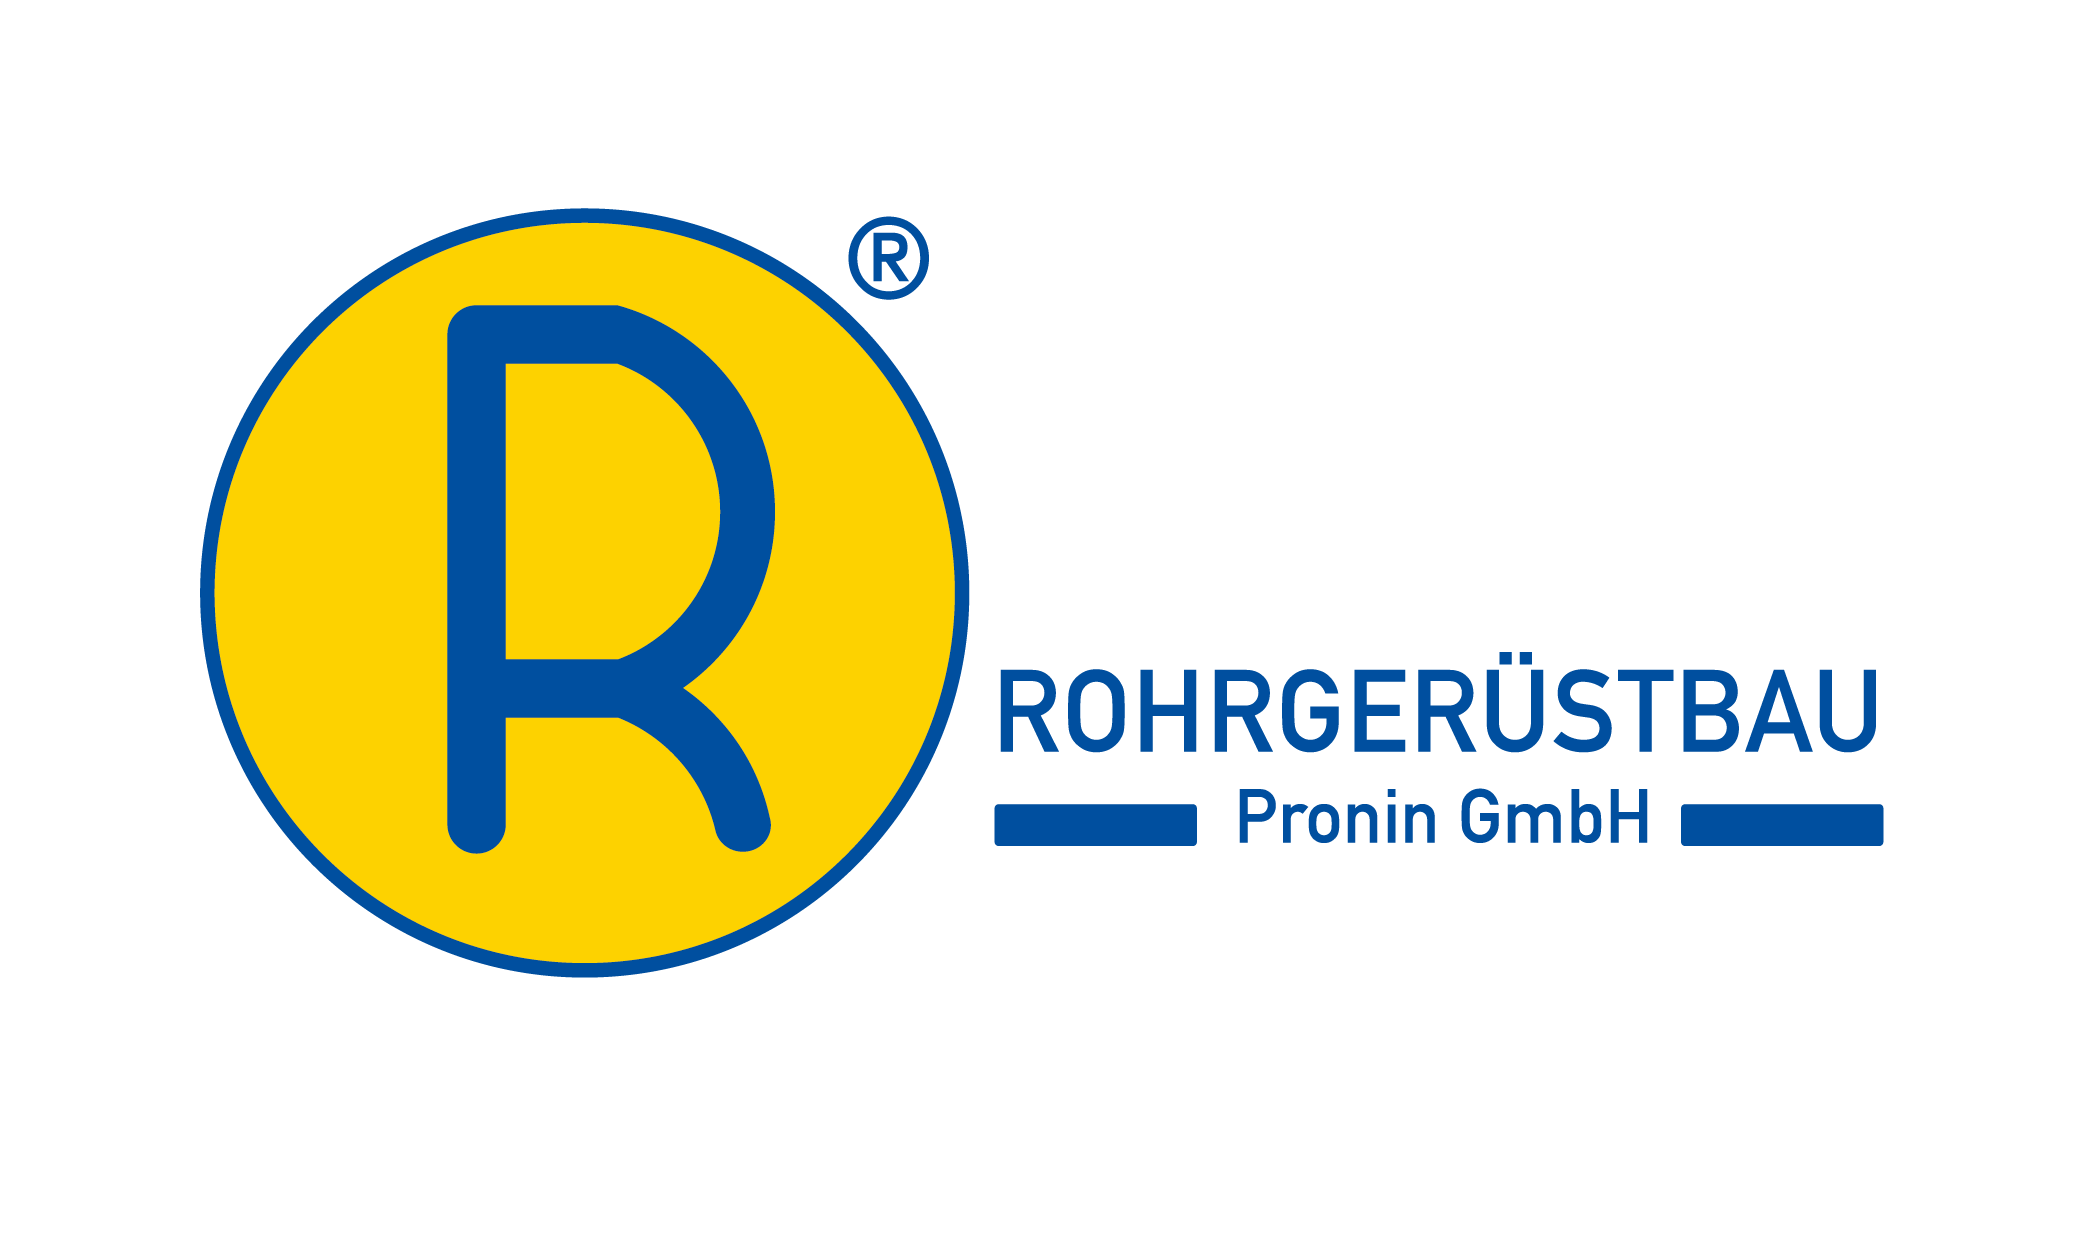 ROHRGERÜSTBAU Pronin GmbH